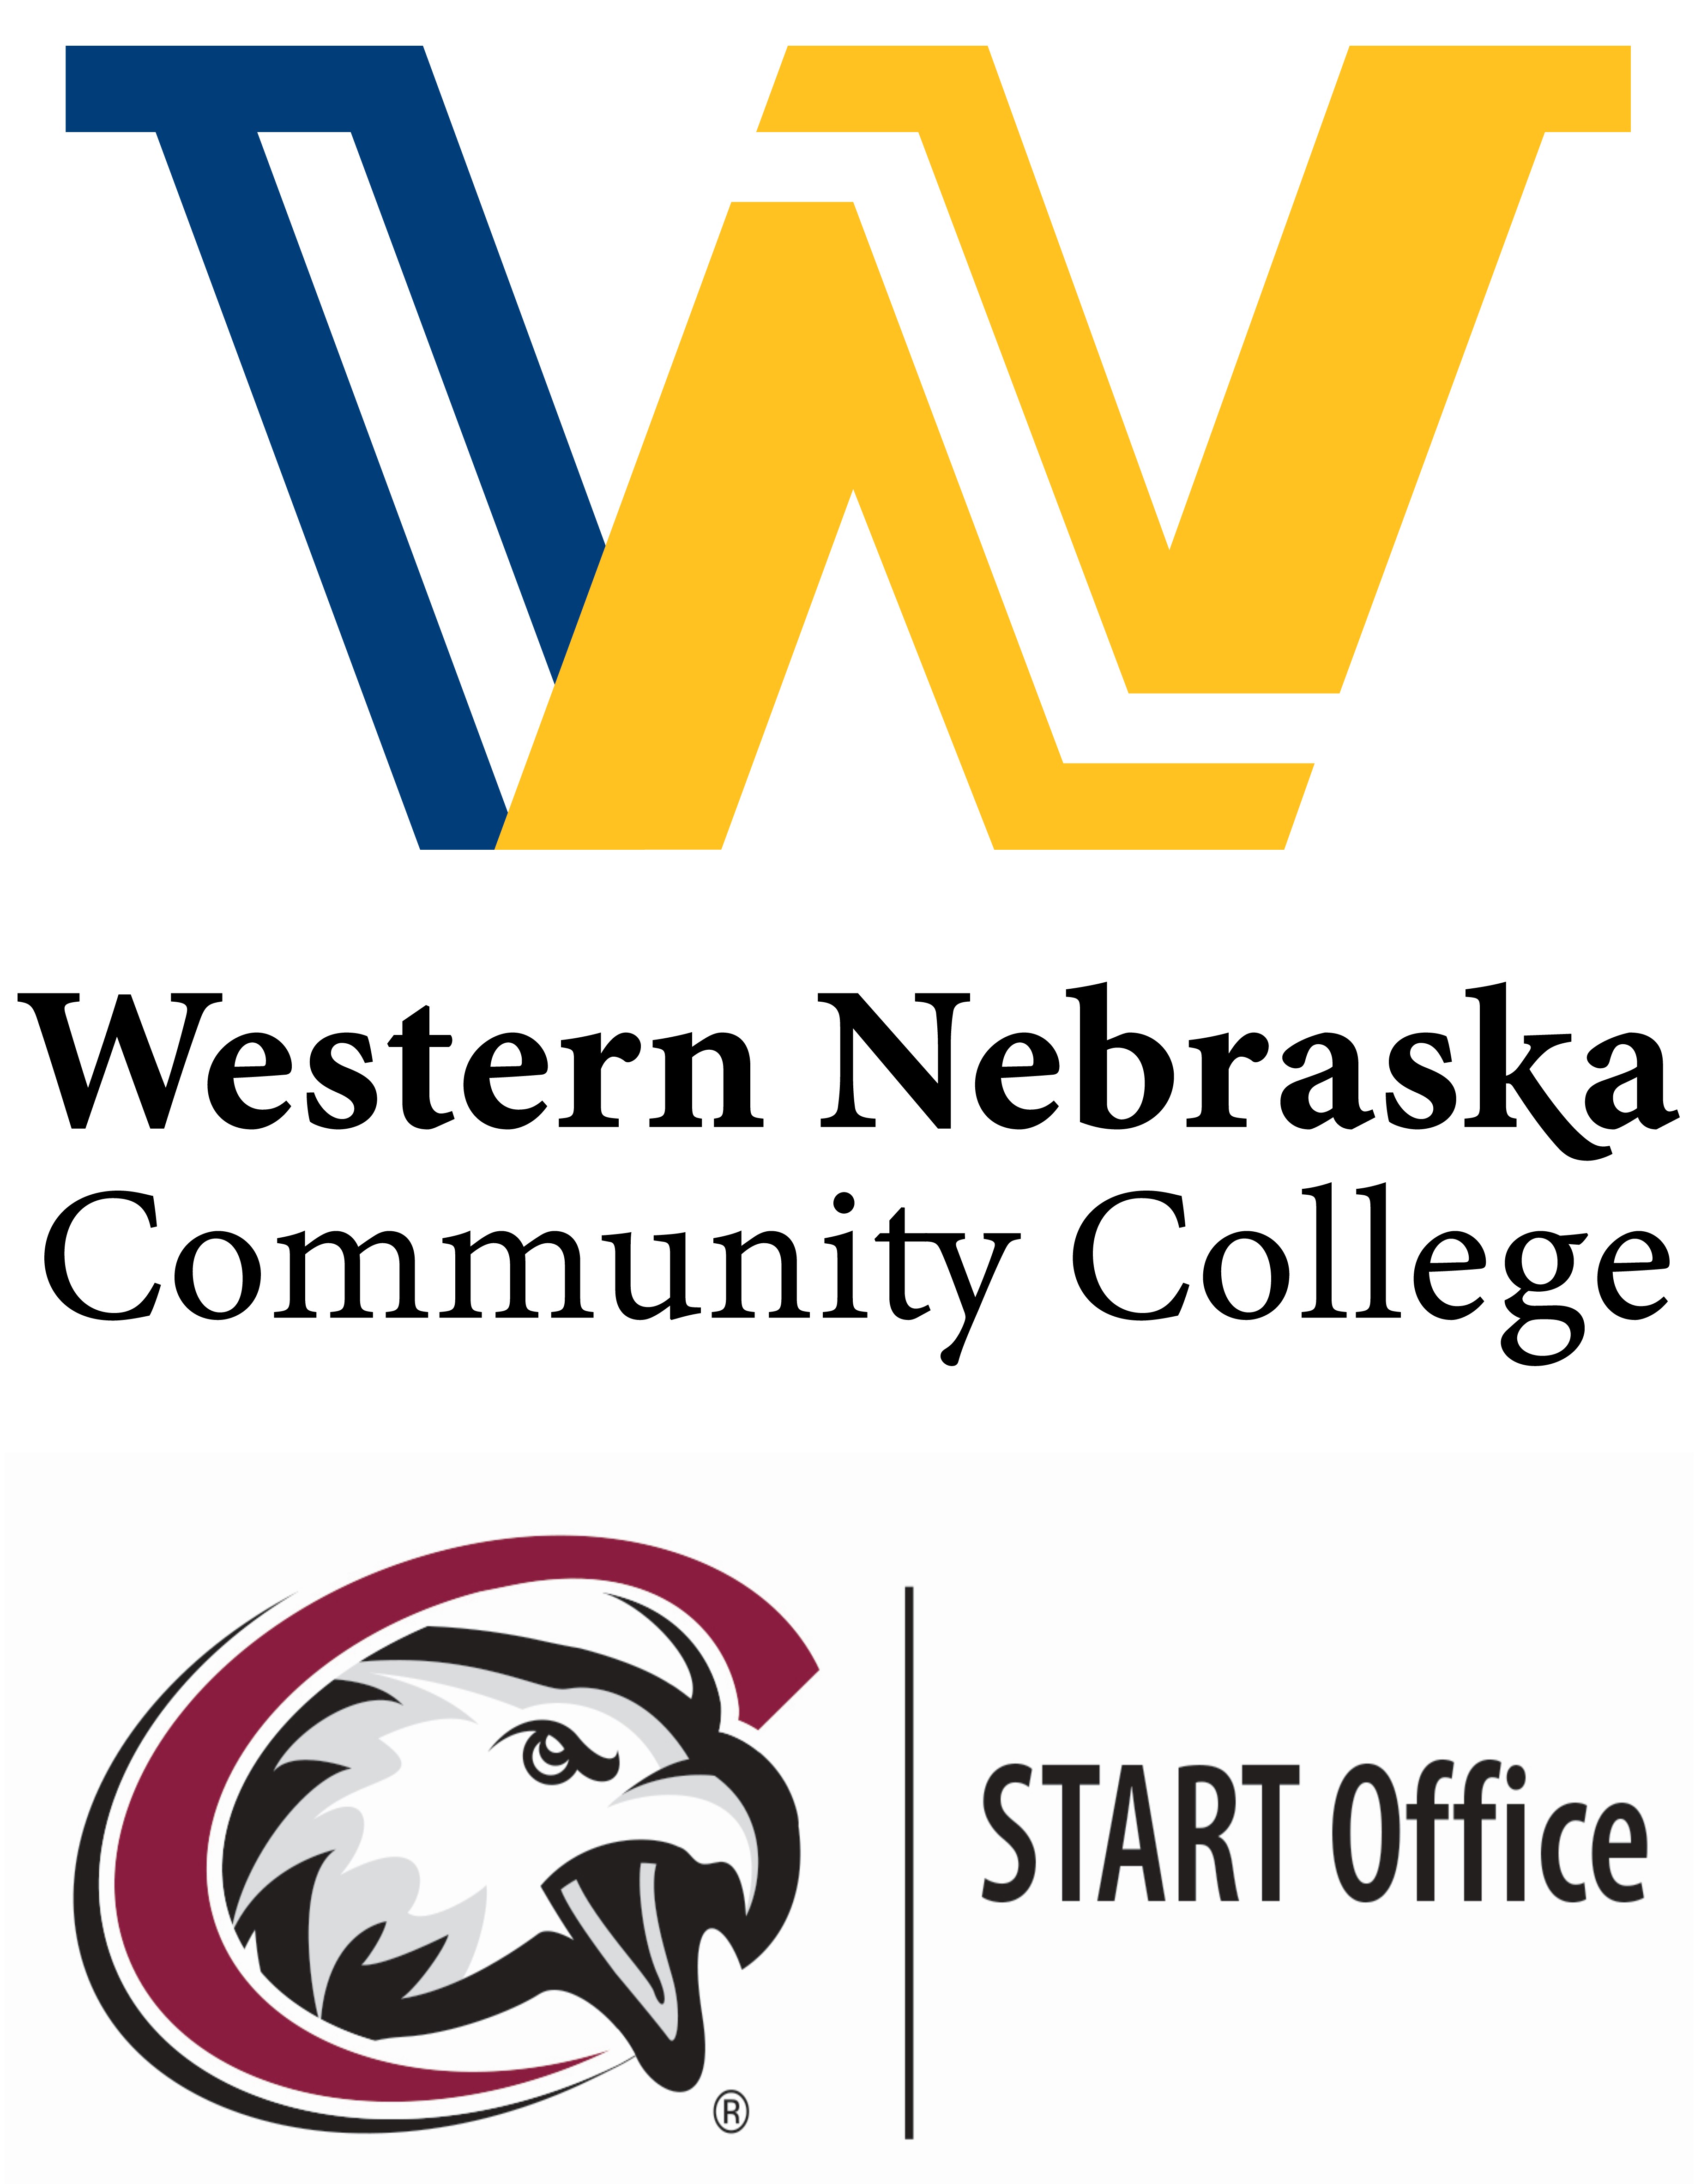 WNCC and START Logo